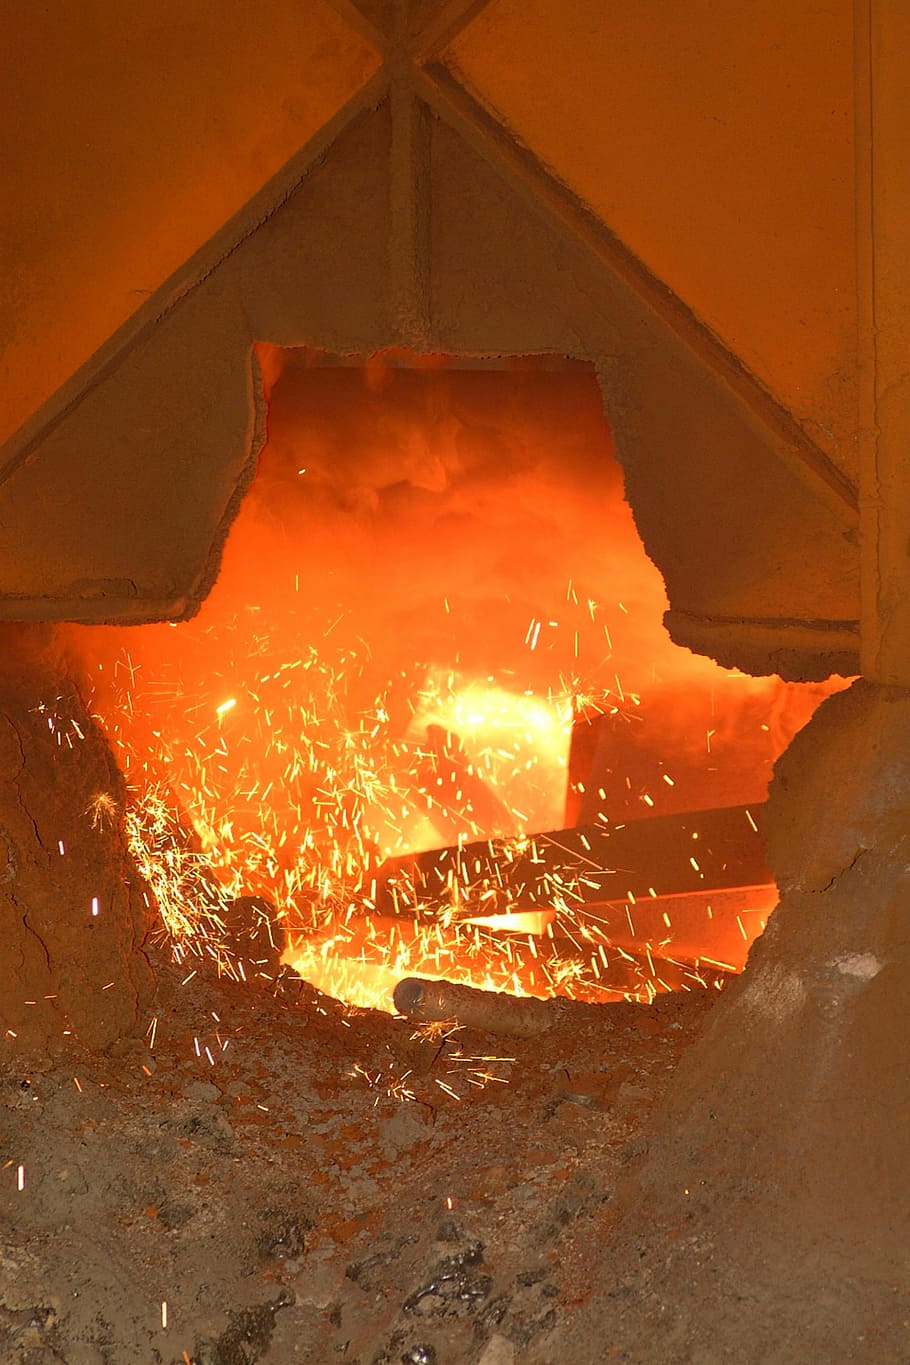 steel mill, worker, foundry, metal, molten, hot, industry, industrial, heat, manufacturing